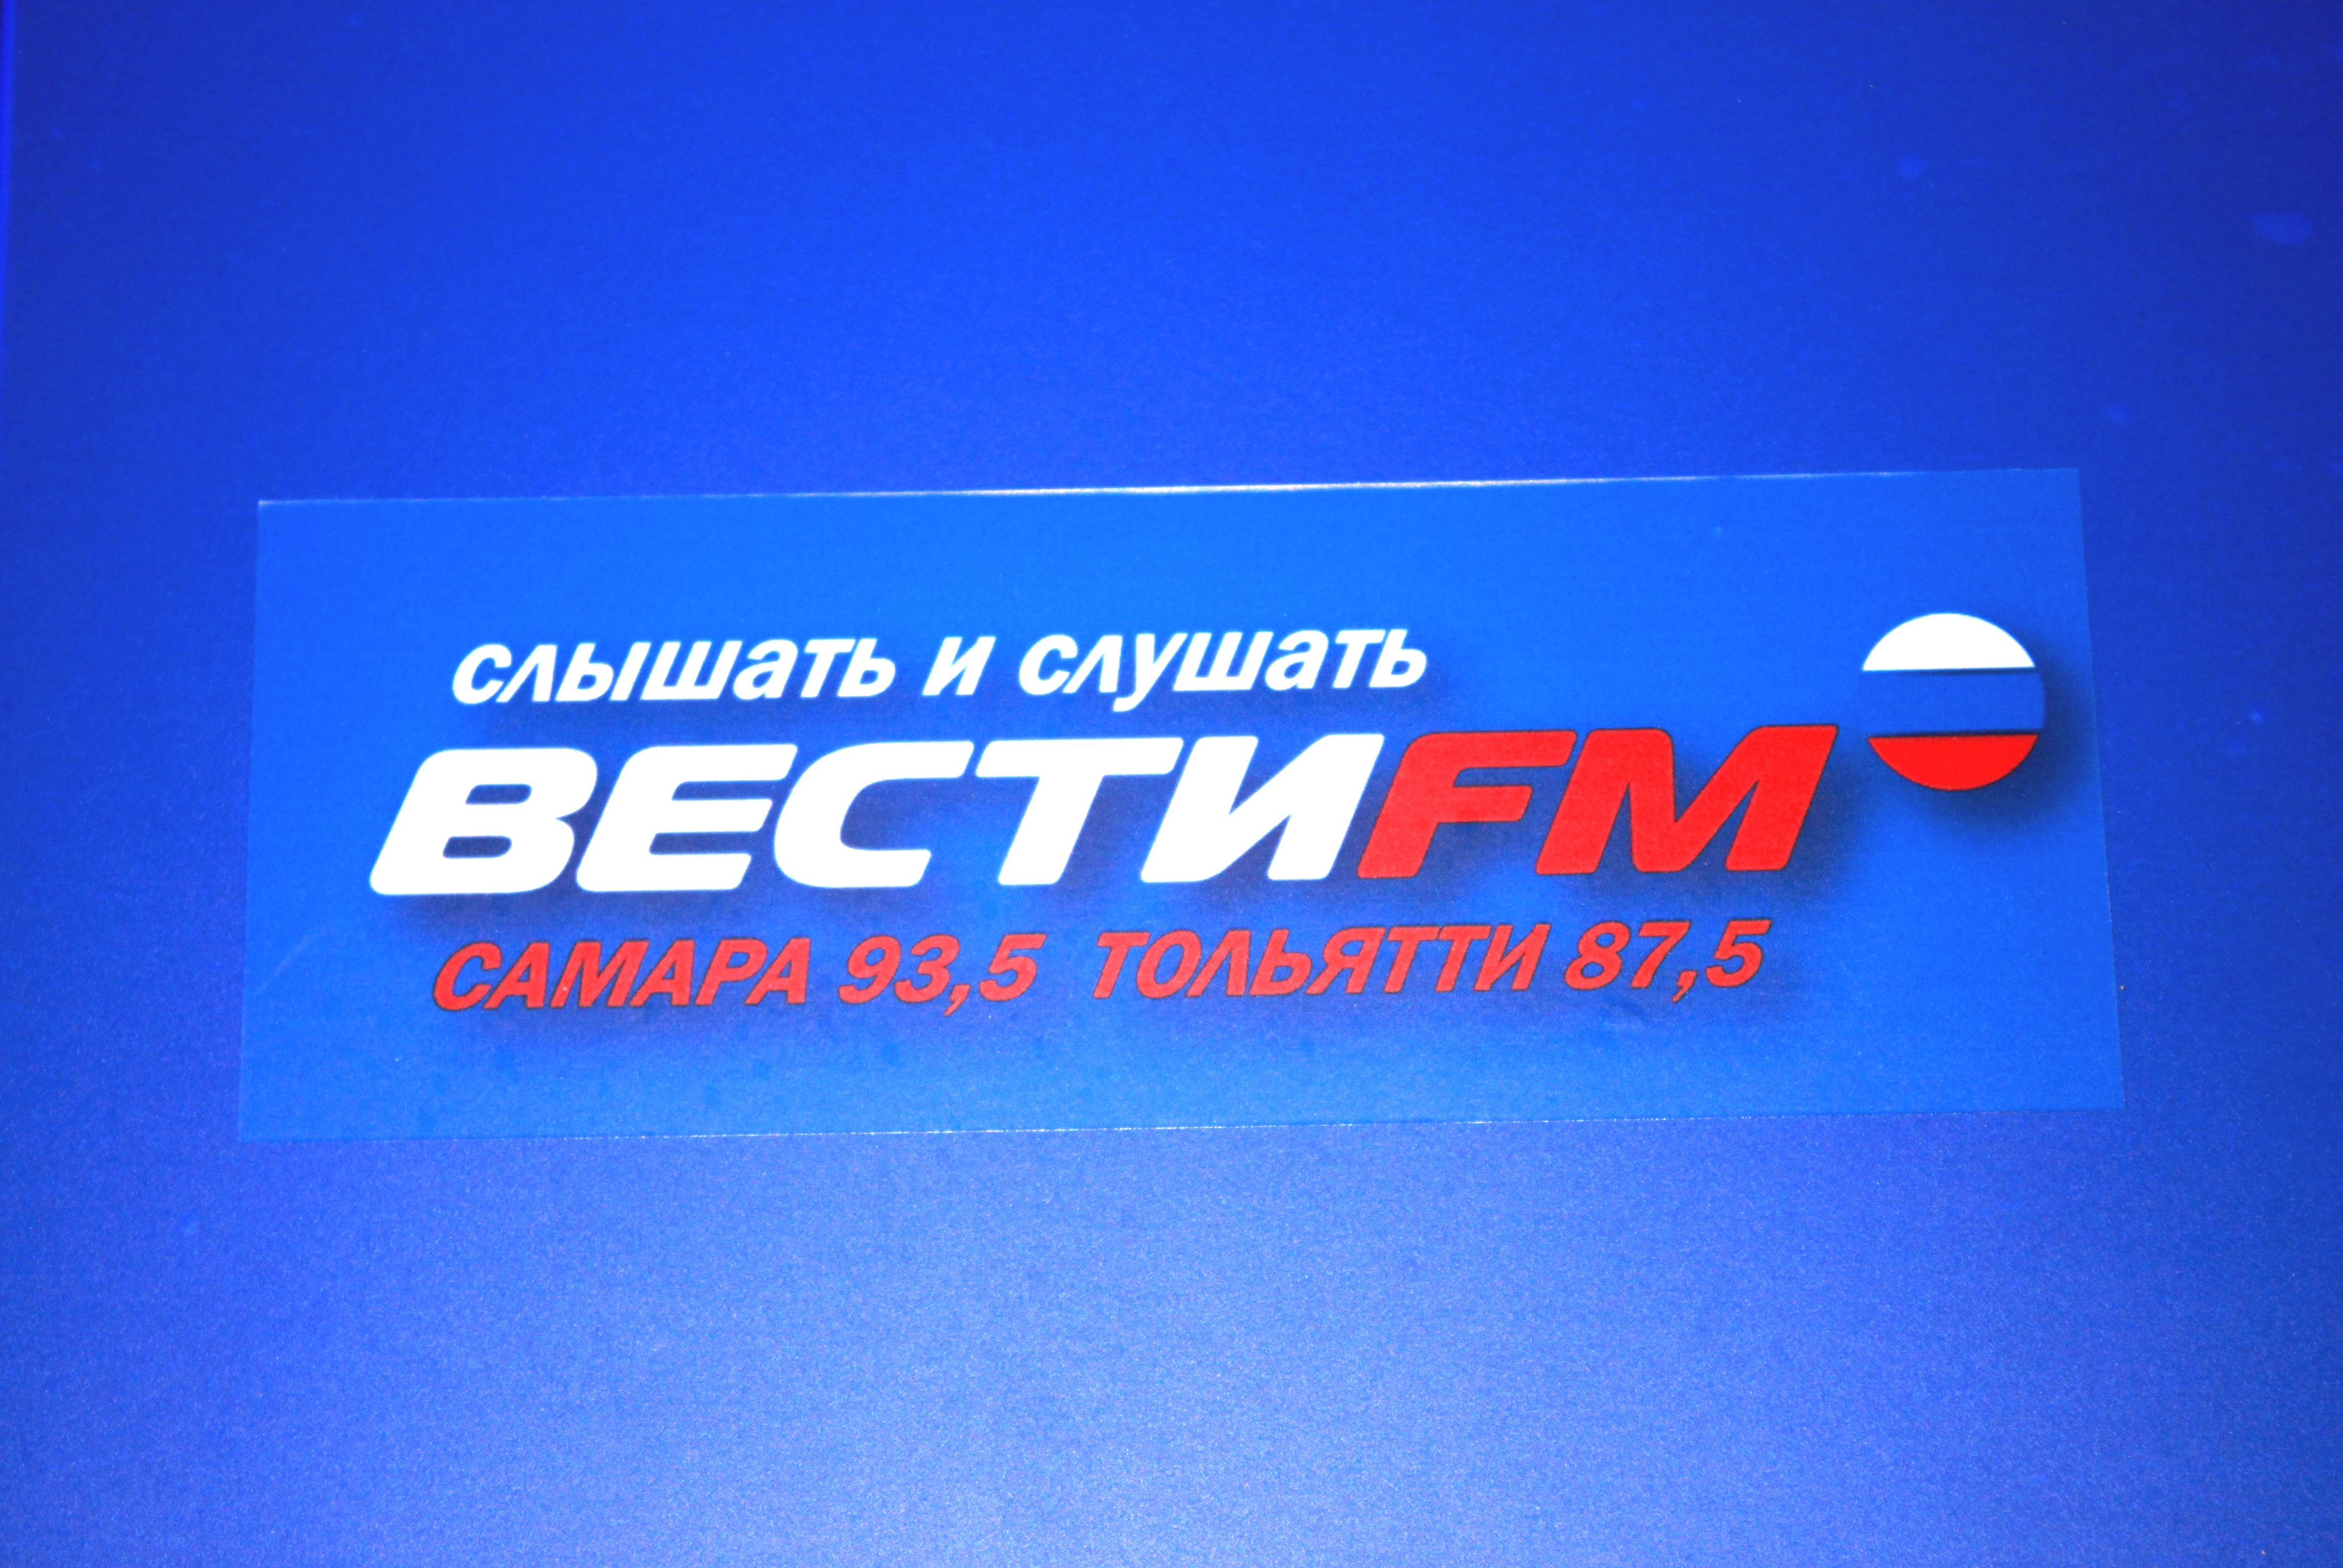 Топ радио вести фм. Вести ФМ. Вести fm логотип. Логотип радиостанции вести ФМ. Вести ФМ студия.